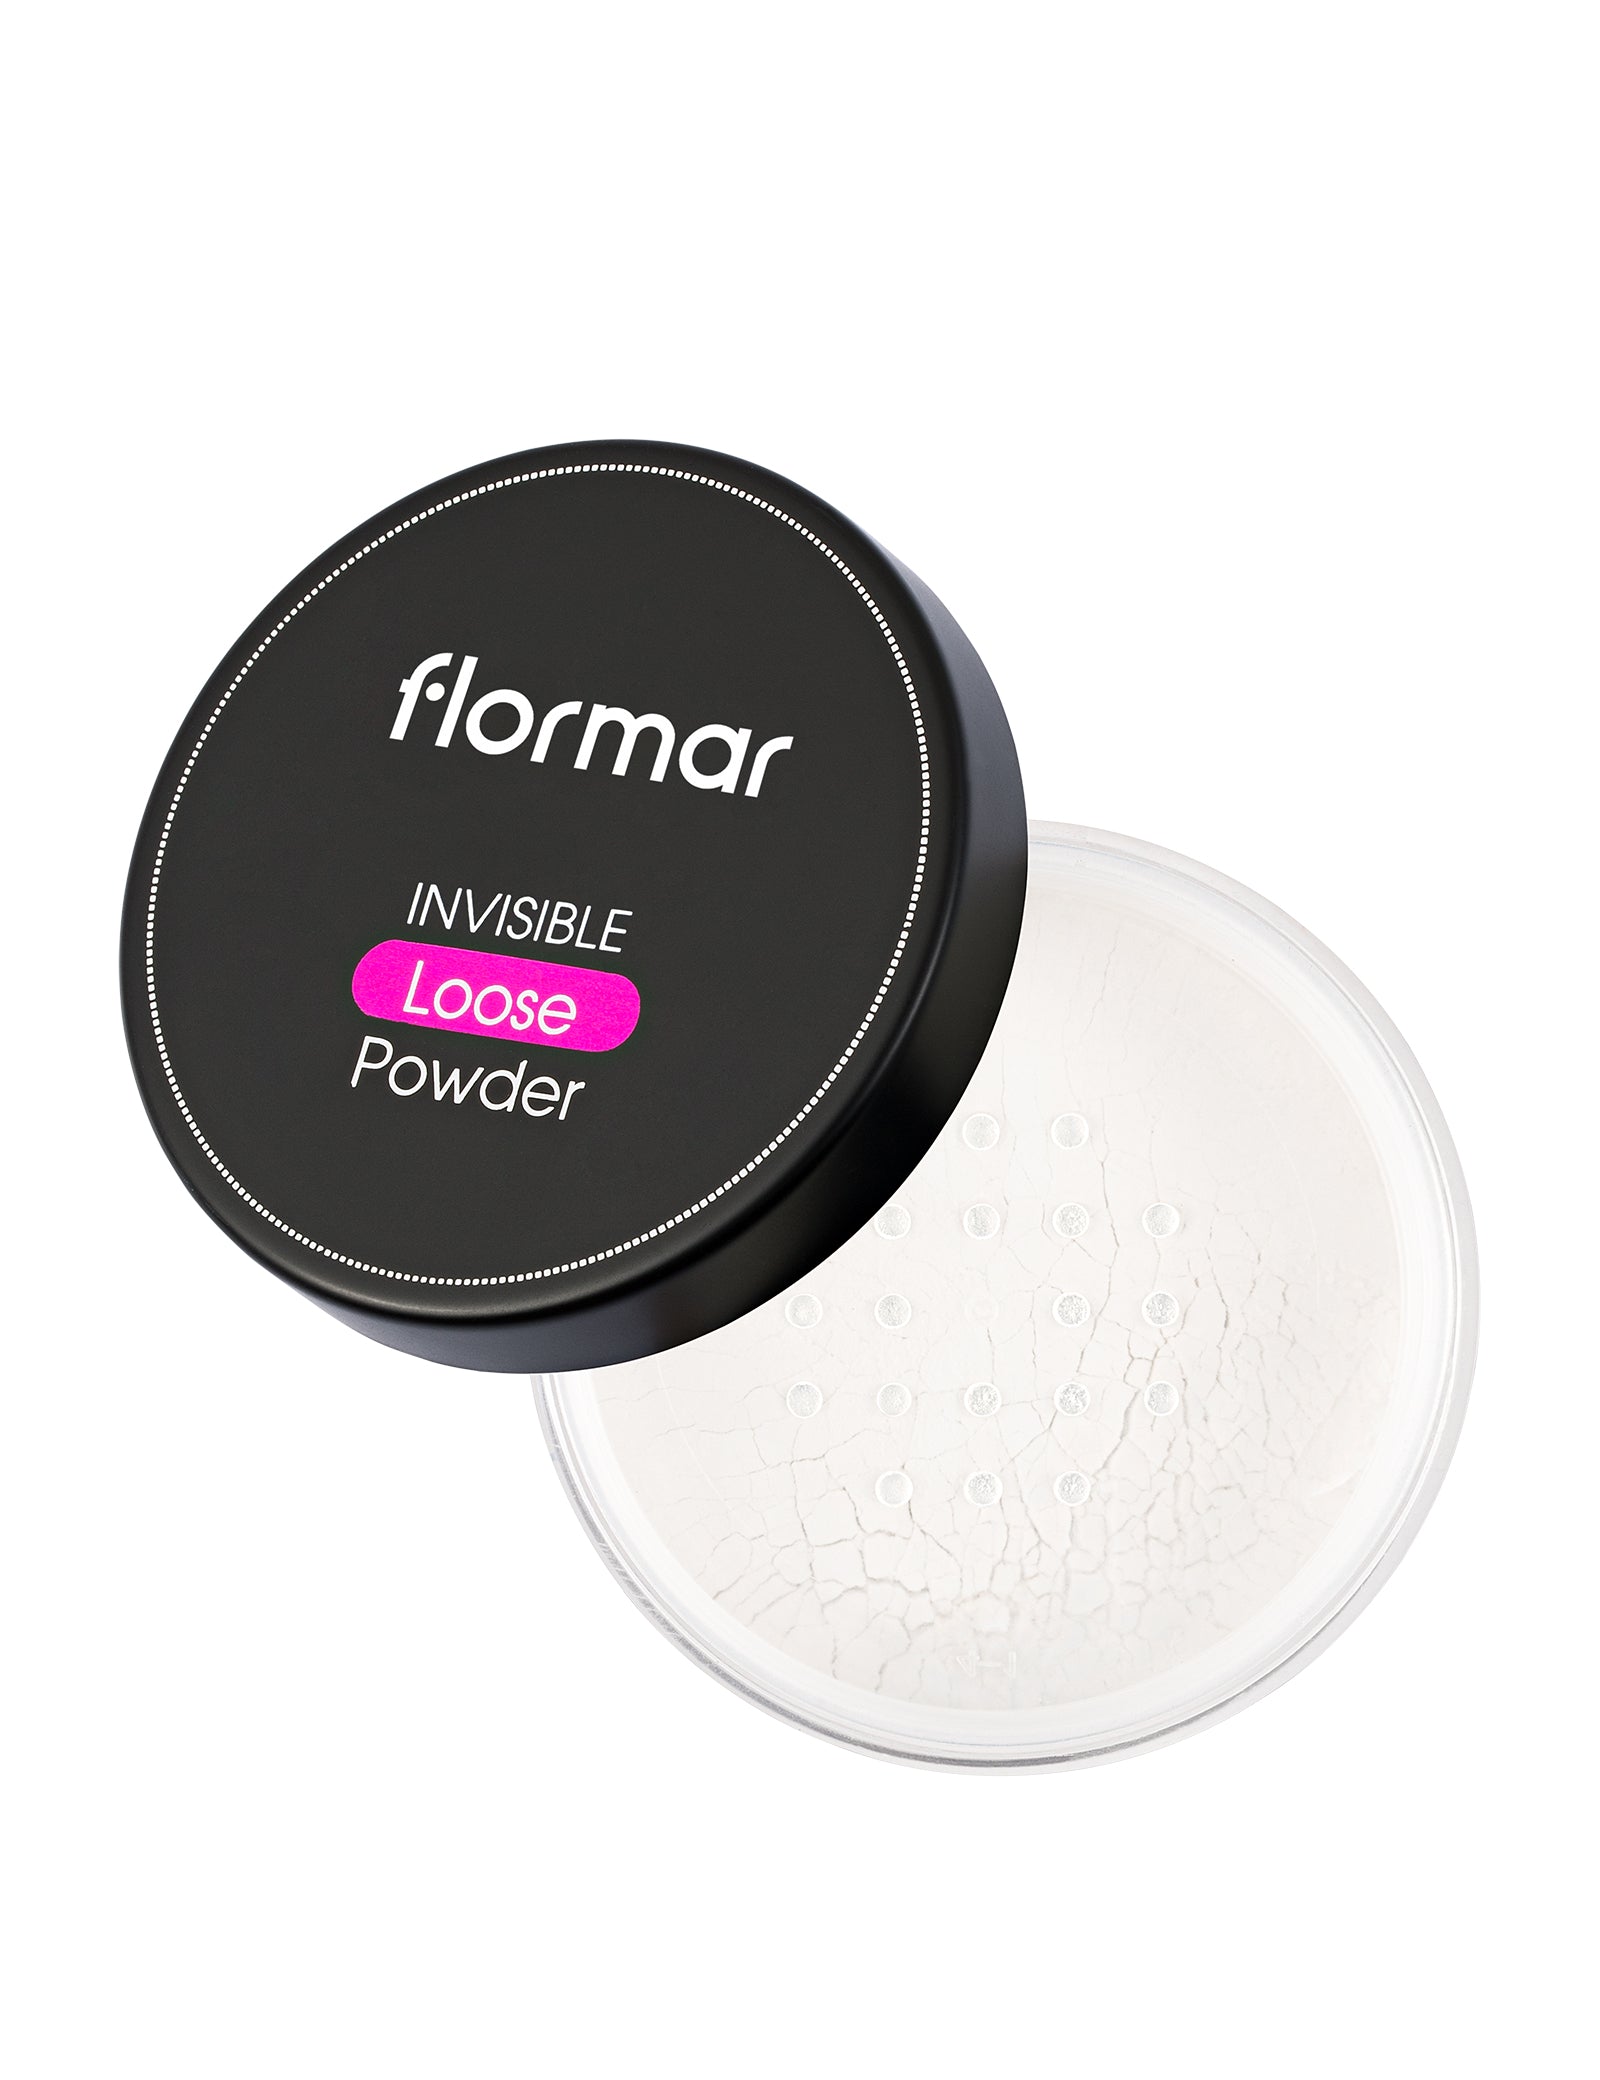 Flormar Loose Powder Invisible